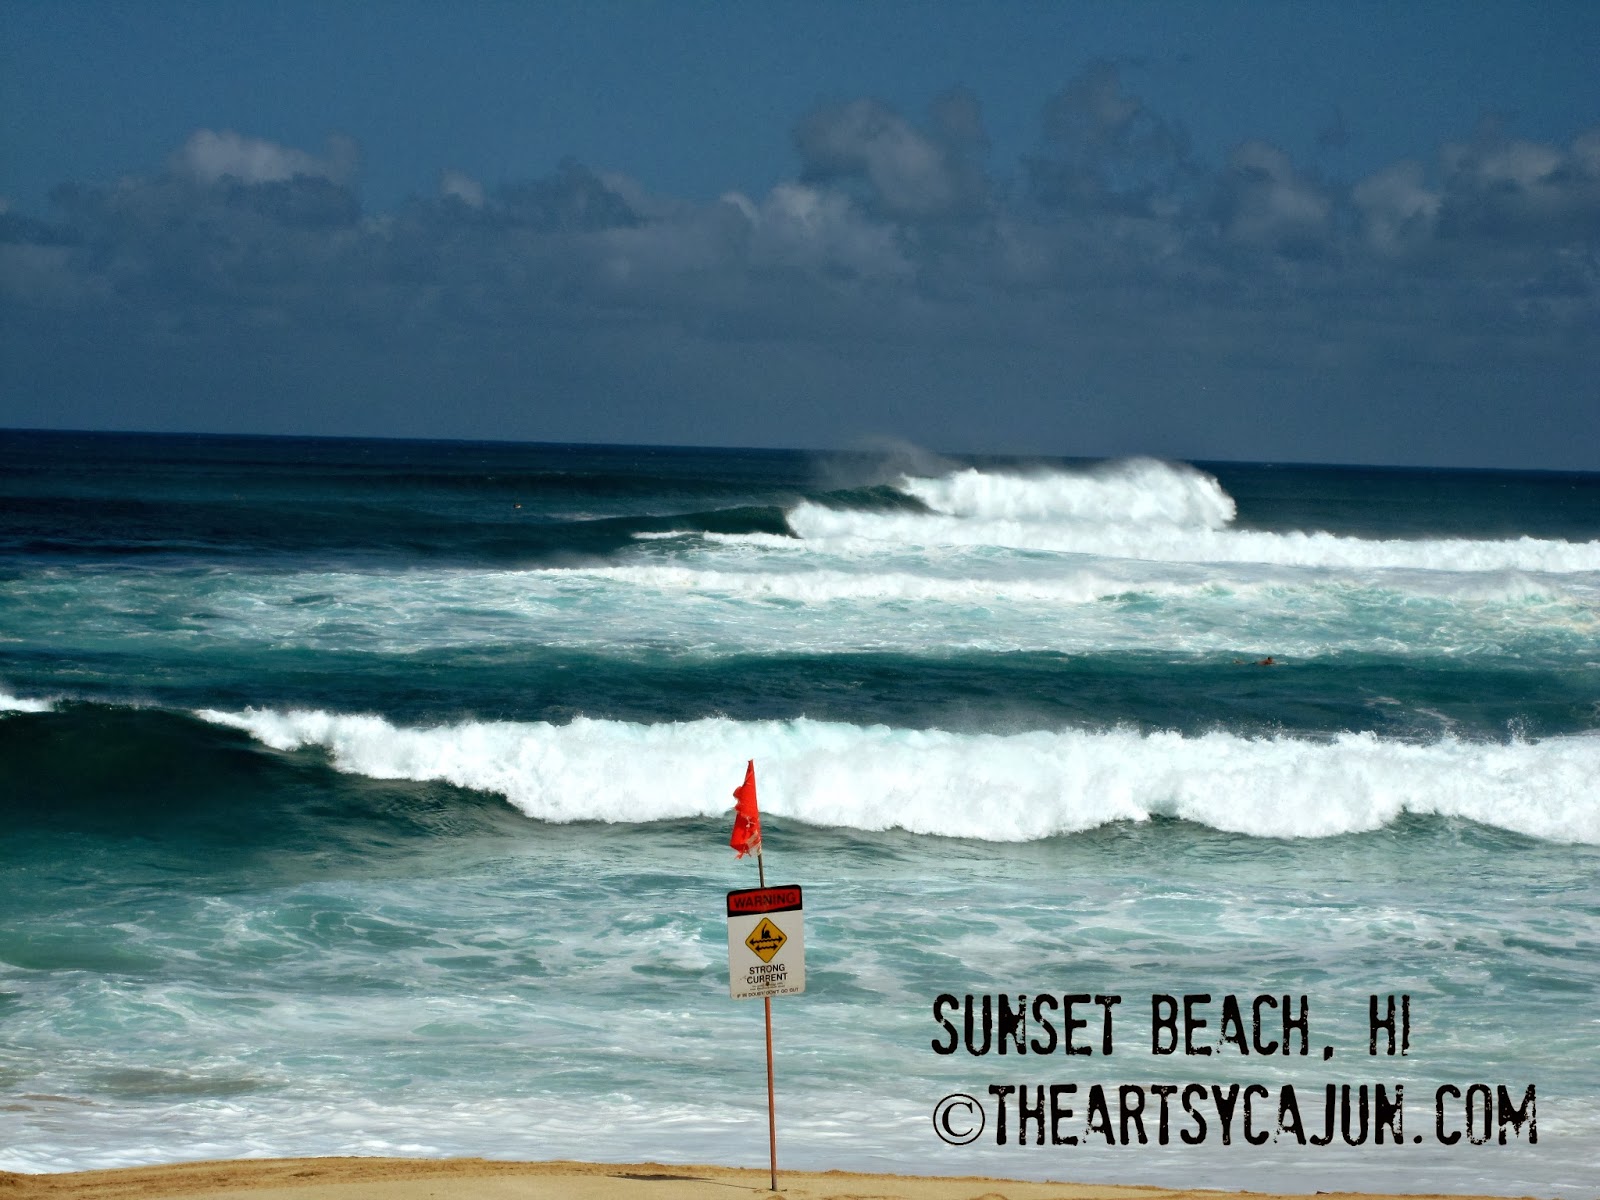 http://www.theartsycajun.com/2014/01/sunset-beach-days.html